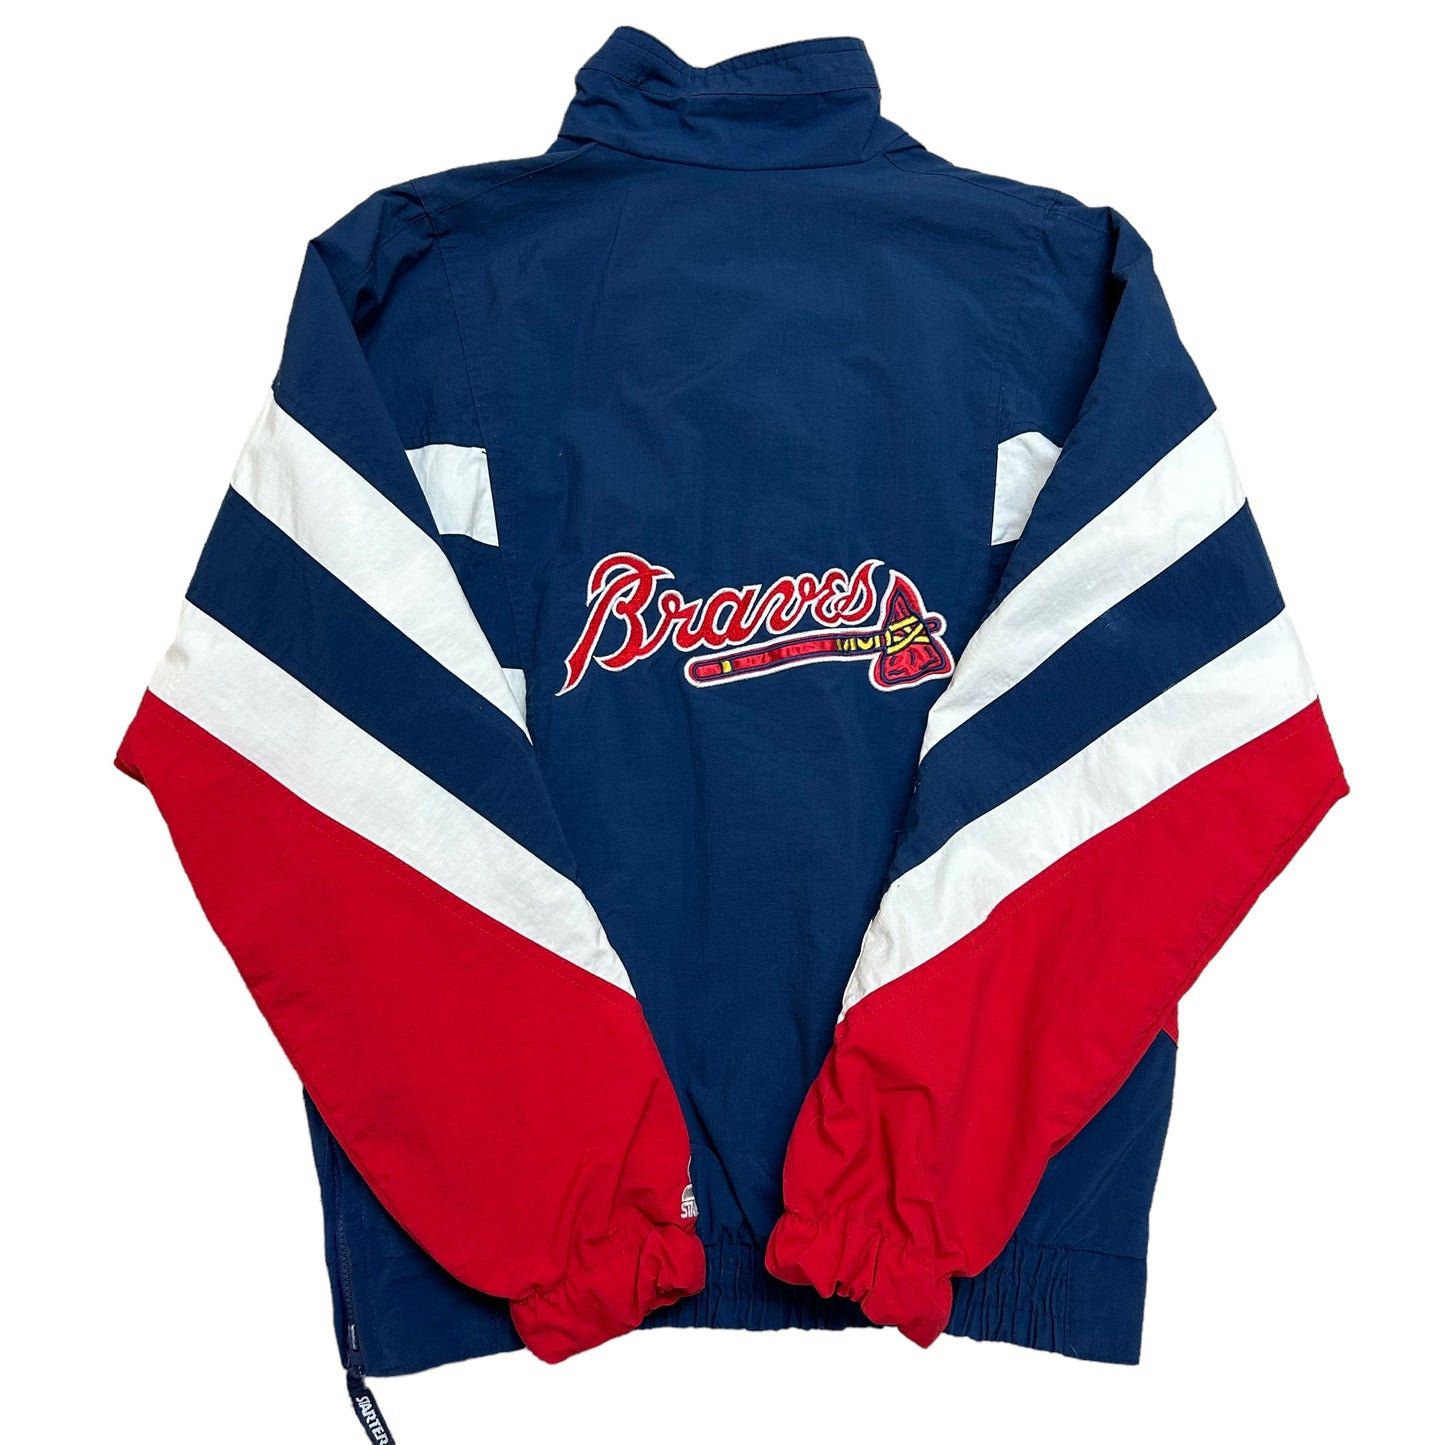 Vintage 1990s Starter Atlanta Braves Half-Zip Jacket - Size Small (Fits S/M)